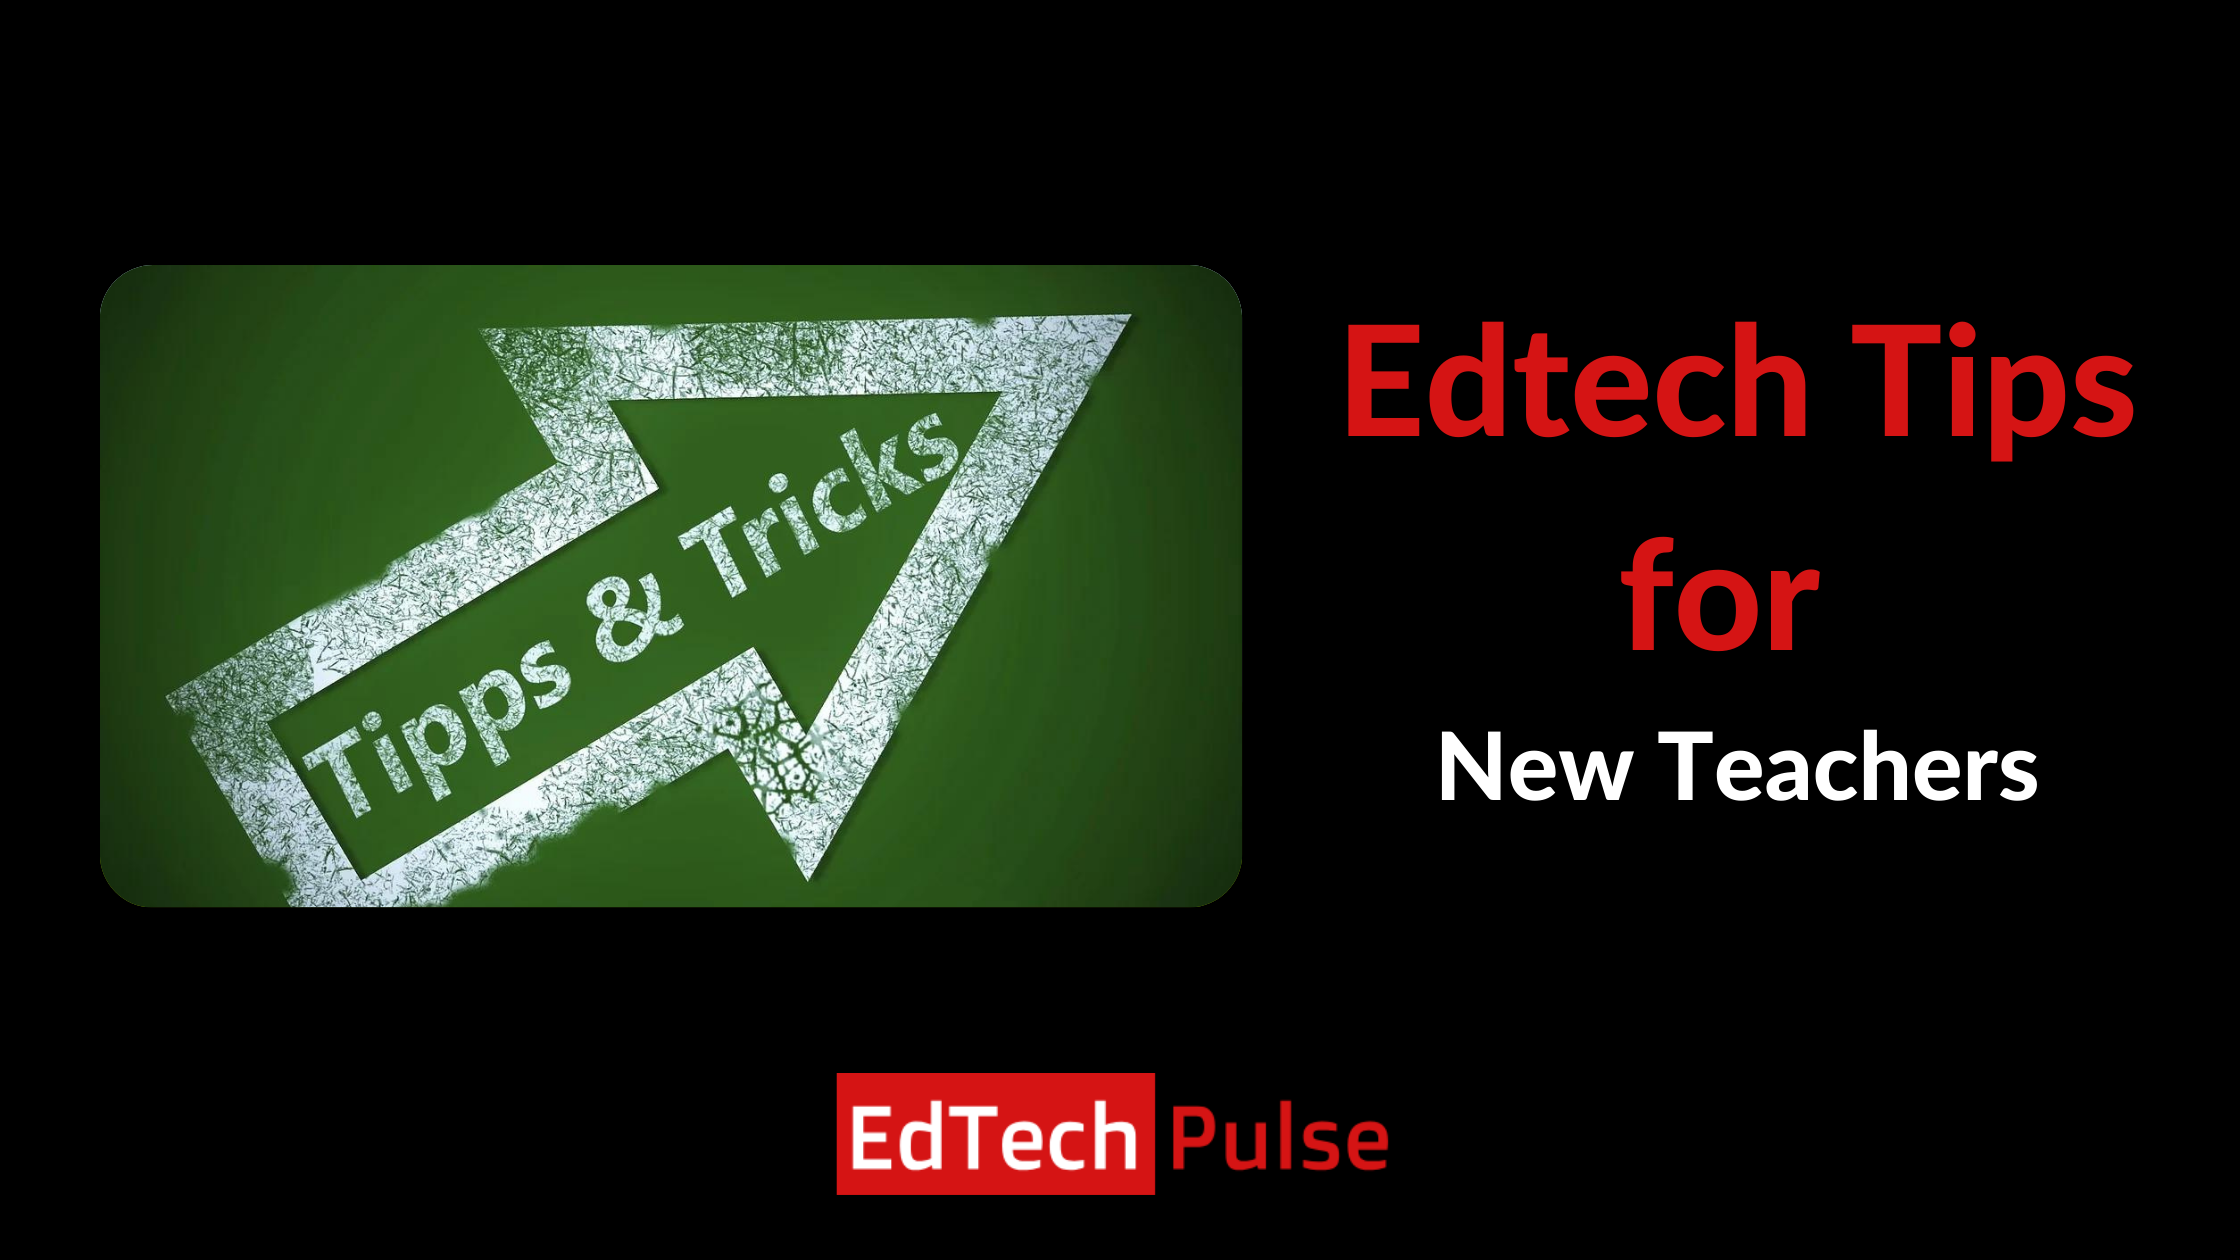 Edtech Tips for New Teachers